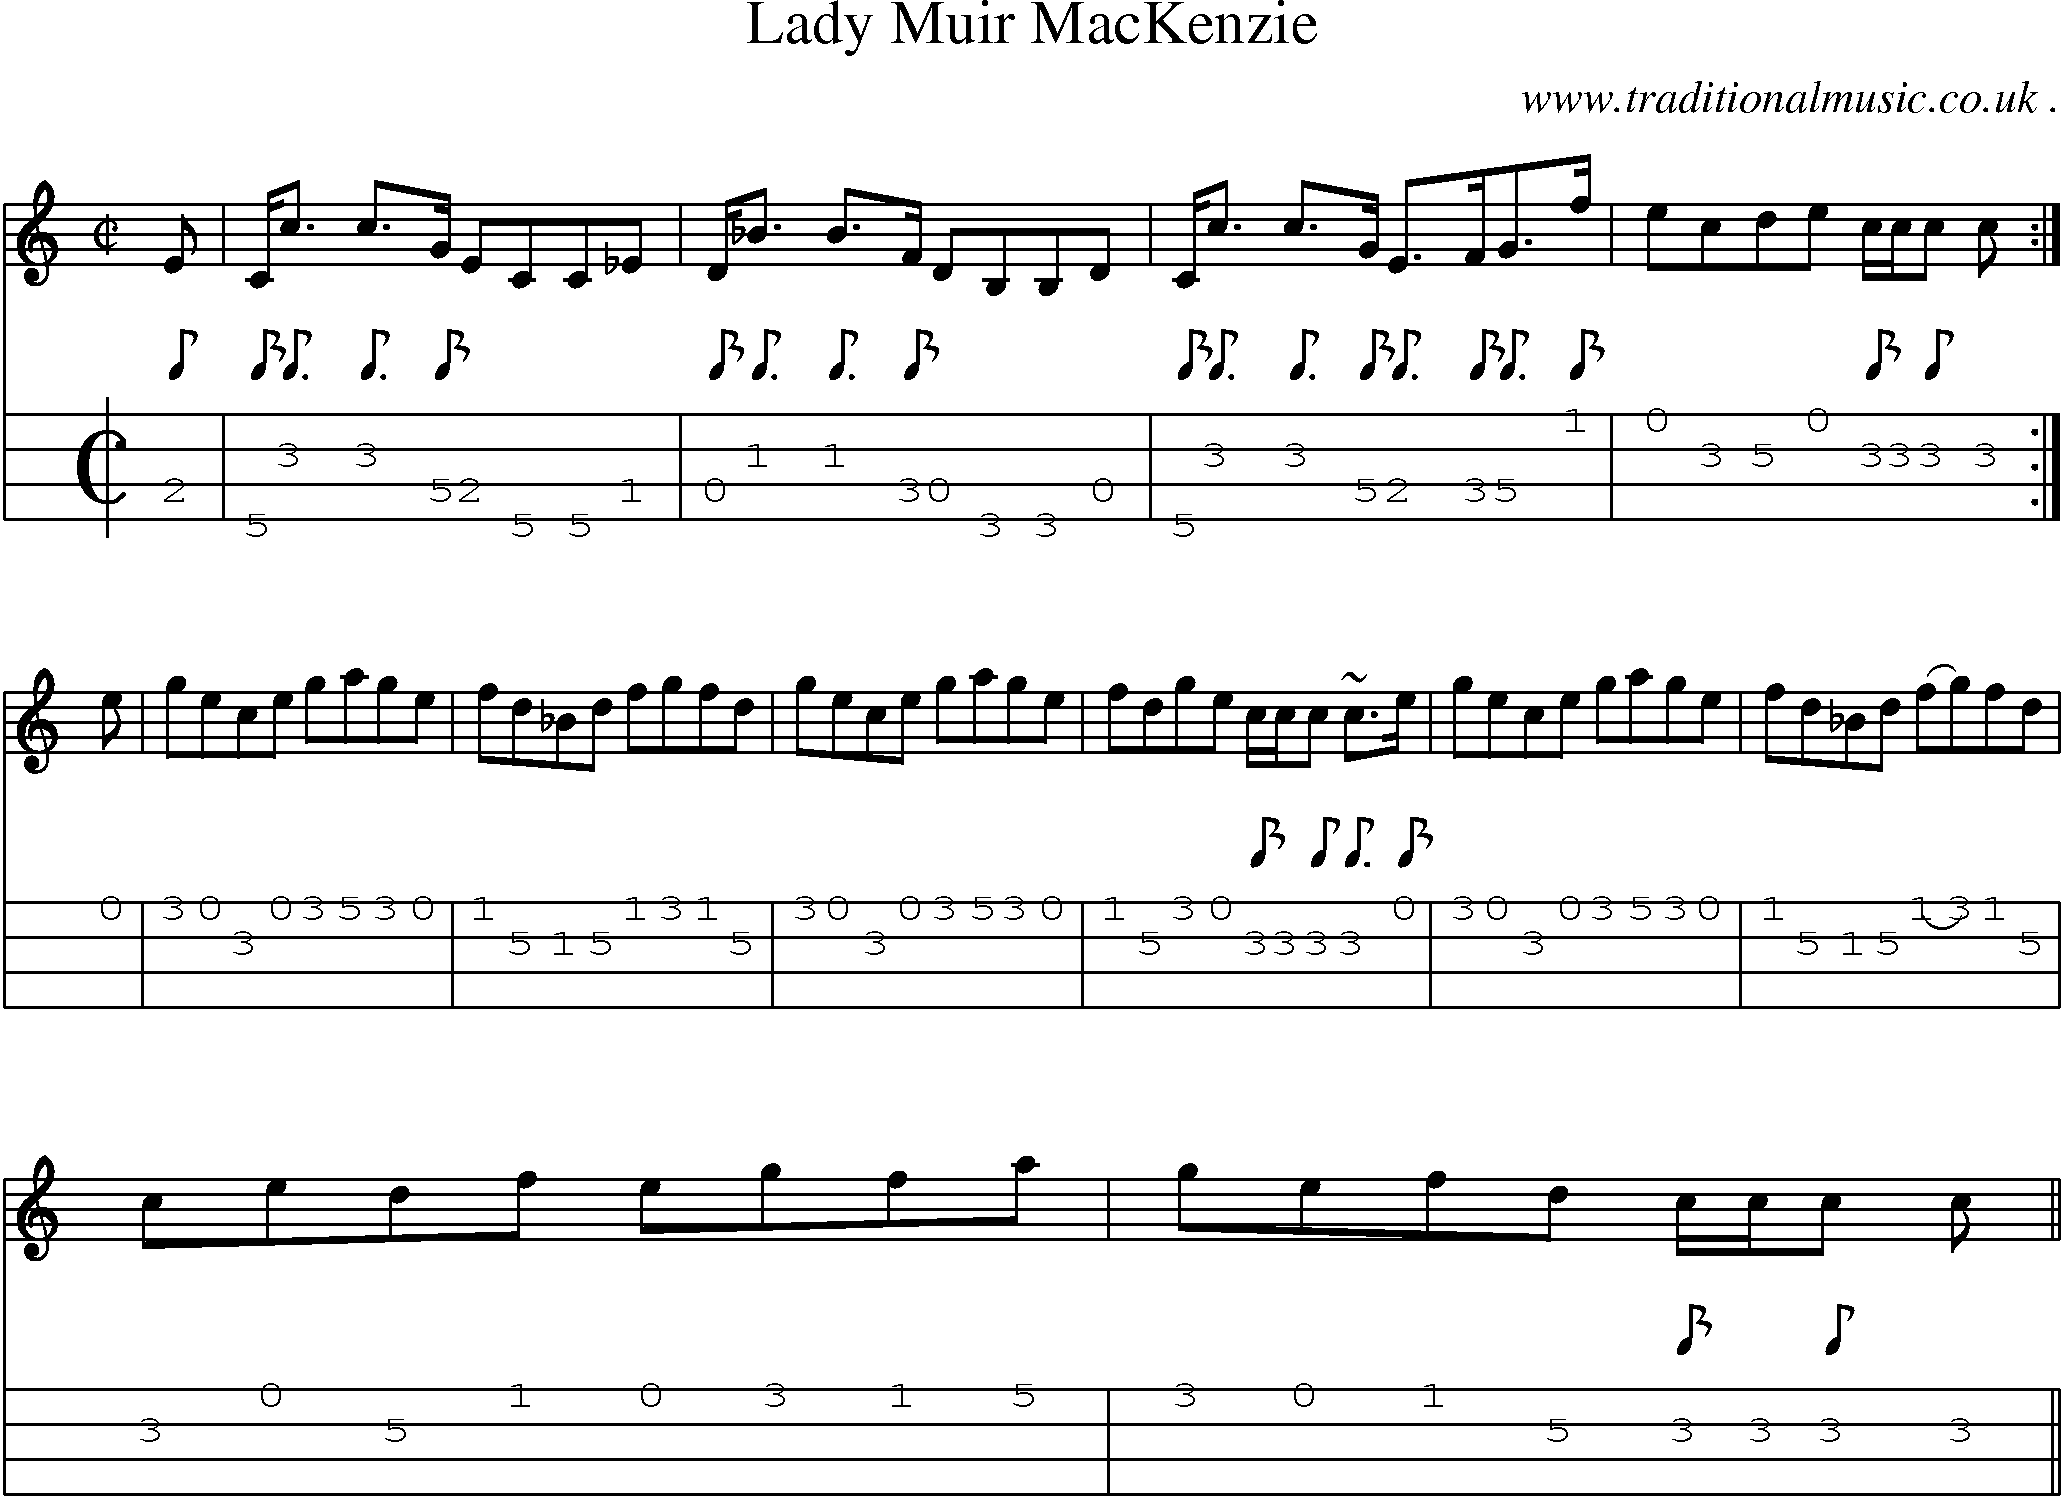 Sheet-music  score, Chords and Mandolin Tabs for Lady Muir Mackenzie